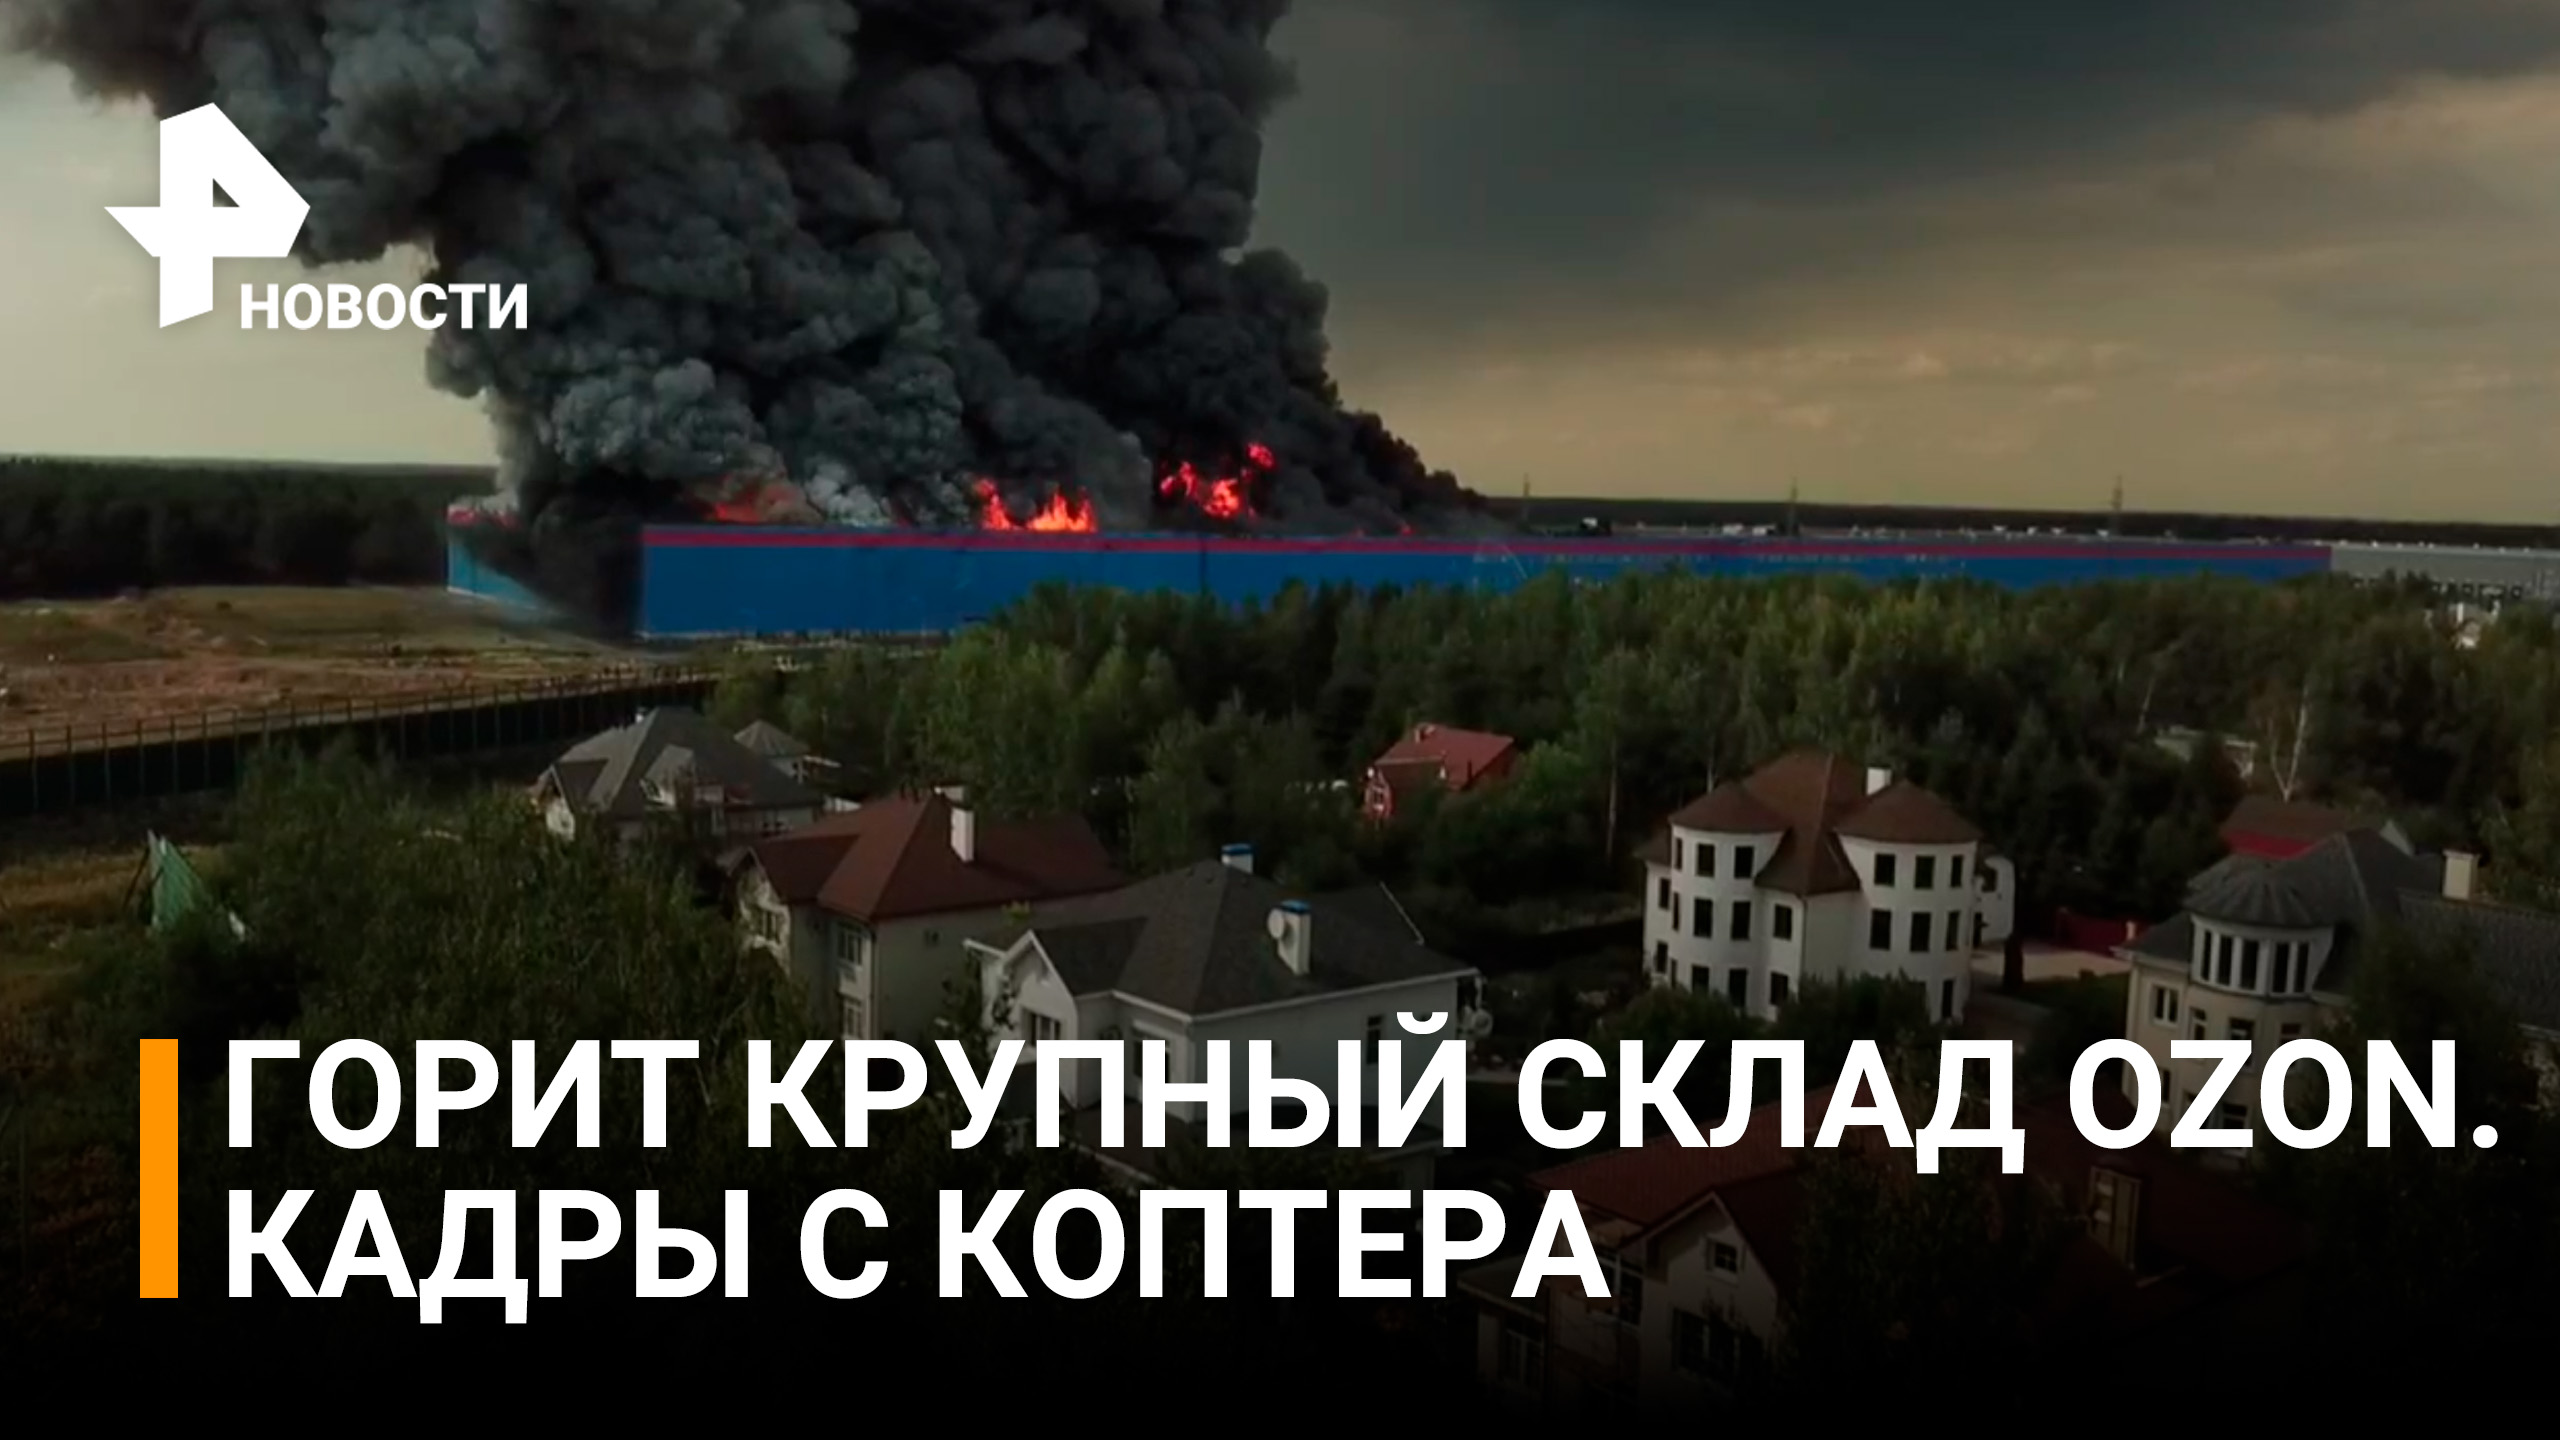 ⚡ Кадры пожара на складе "Ozon" с коптера / РЕН Новости